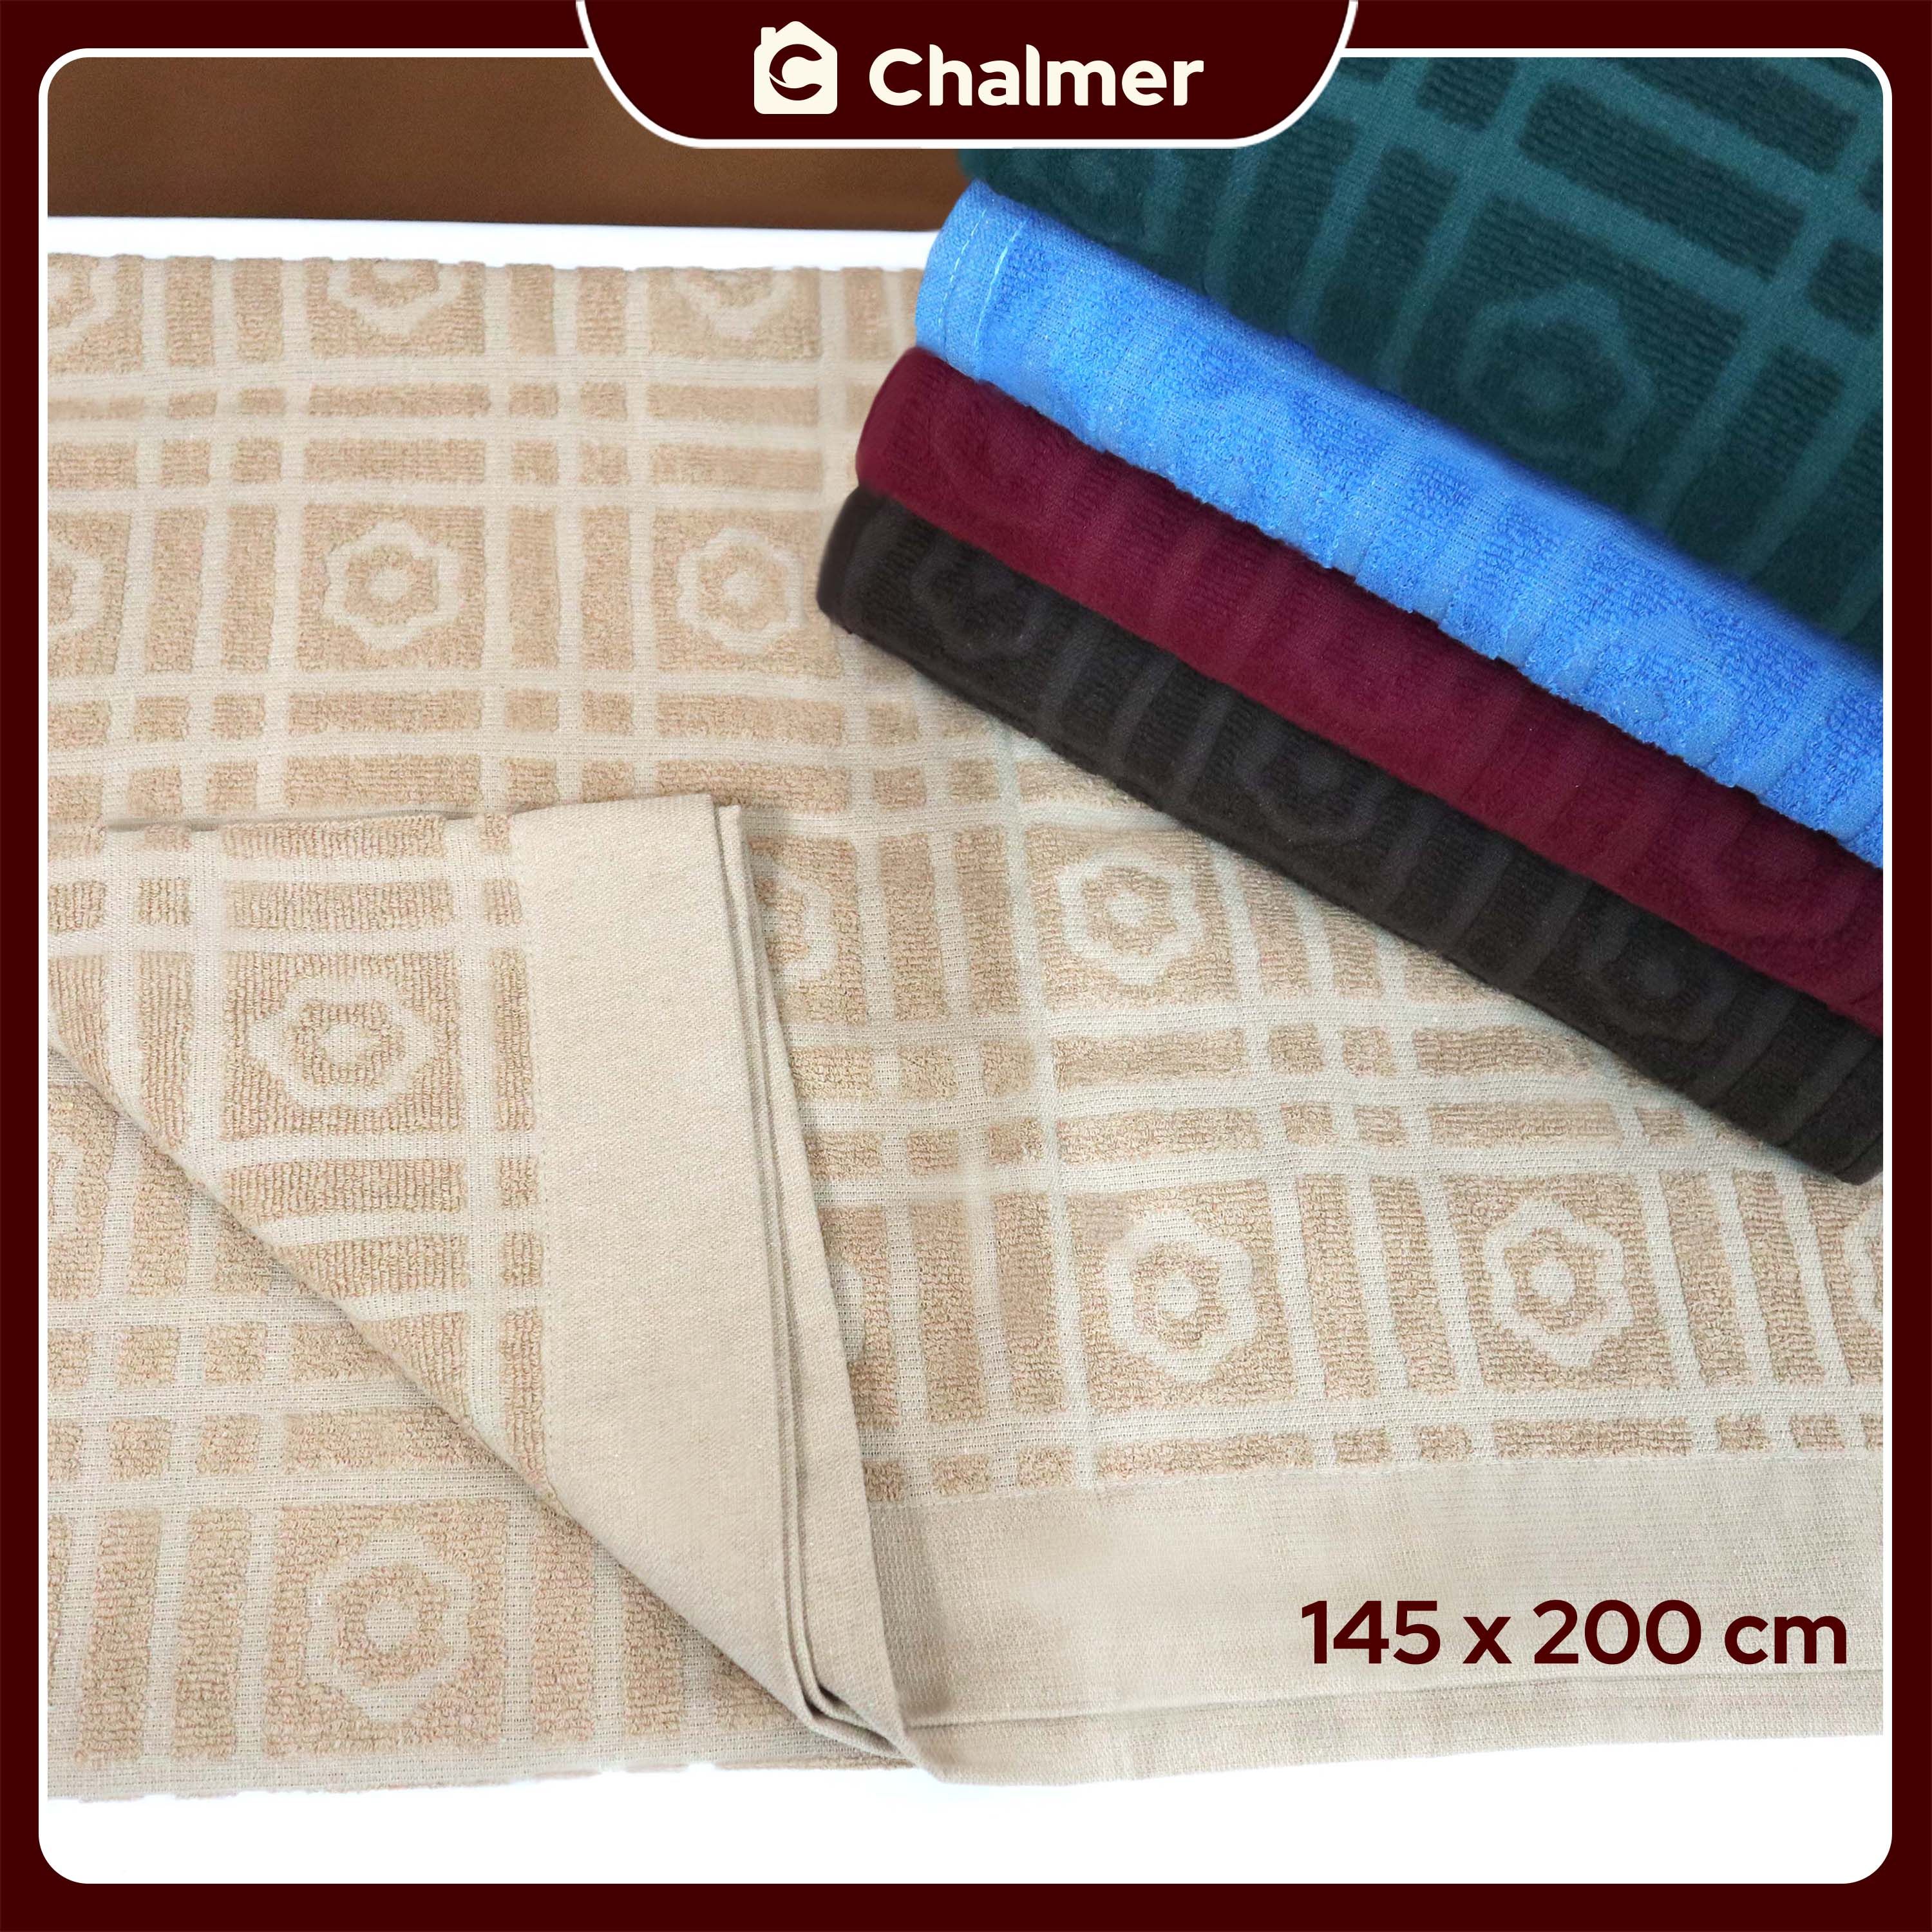 Selimut Katun Chalmer Ukuran 145x200 cm Terry Cloth Towel Blanket - Dark Brown - 5